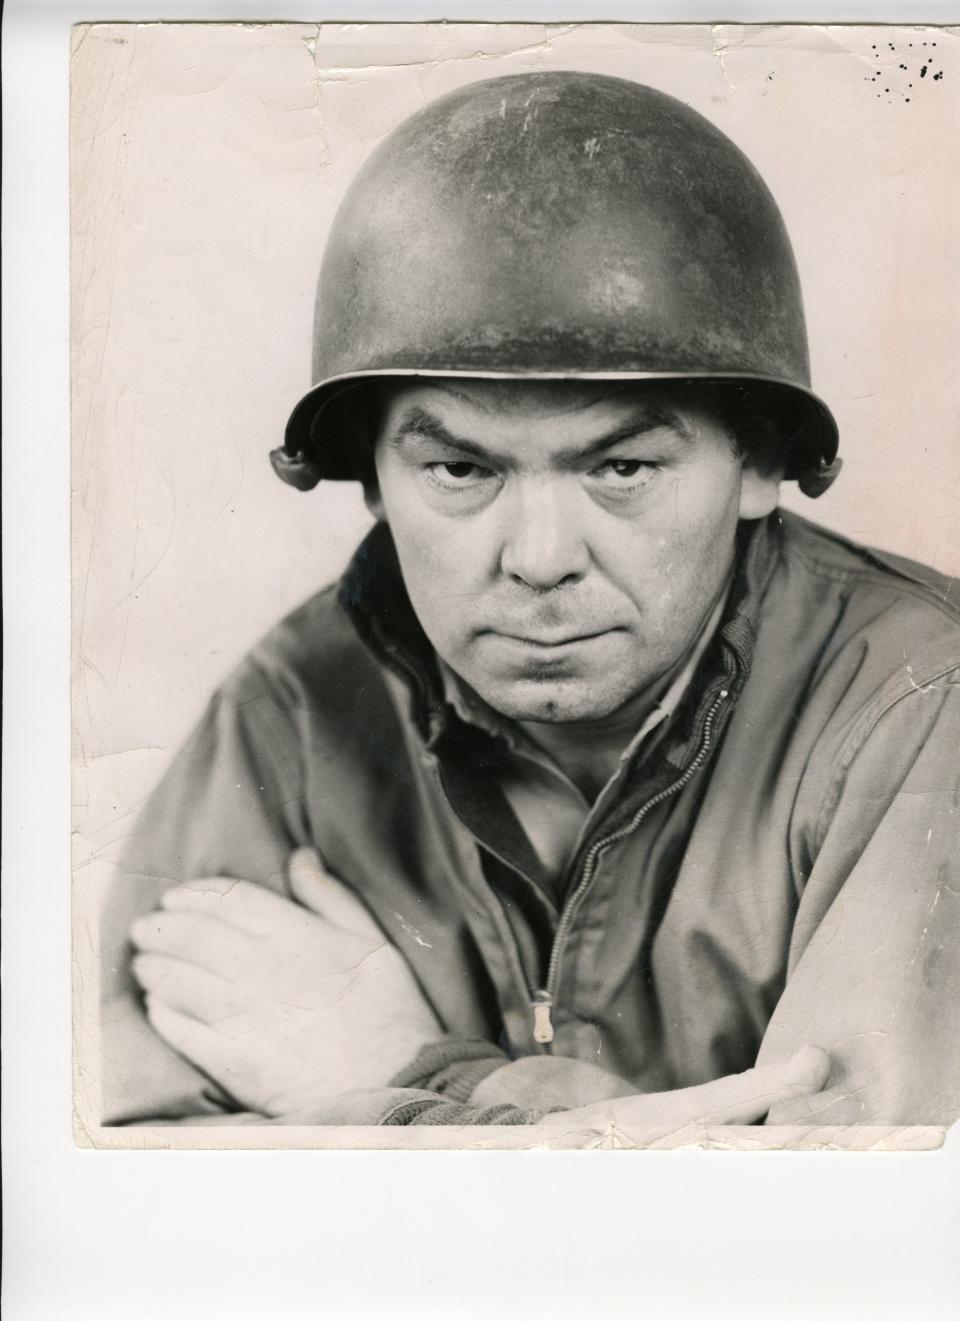 An undated photo of Gordon Gammack, who was a Des Moines Register war correspondent in World War II, the Korean War and the Vietnam War.